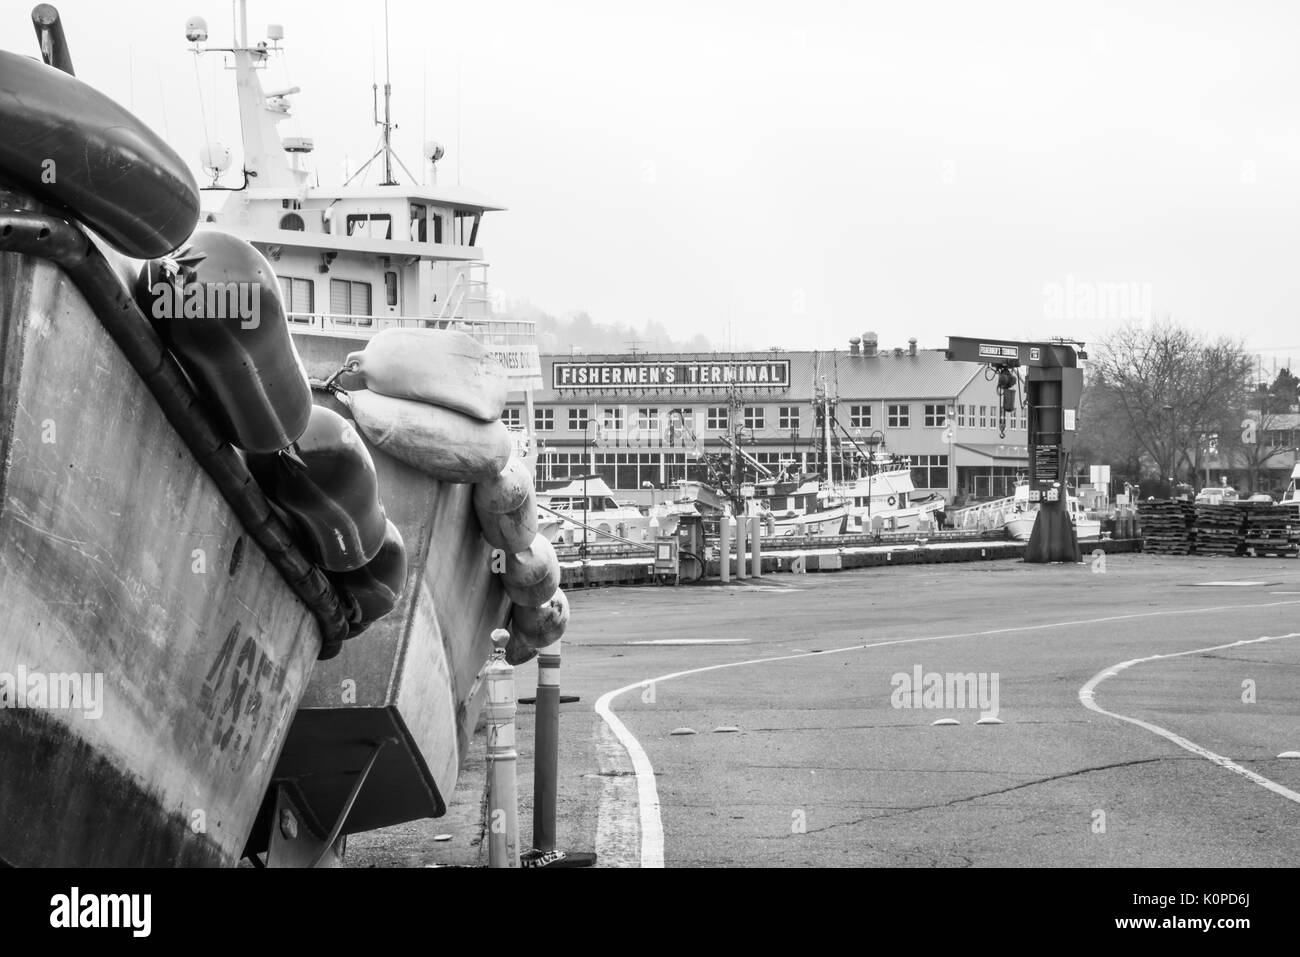 Dated Photo Fishermen's Terminal, Seattle, Washington Black & White Stock Photo